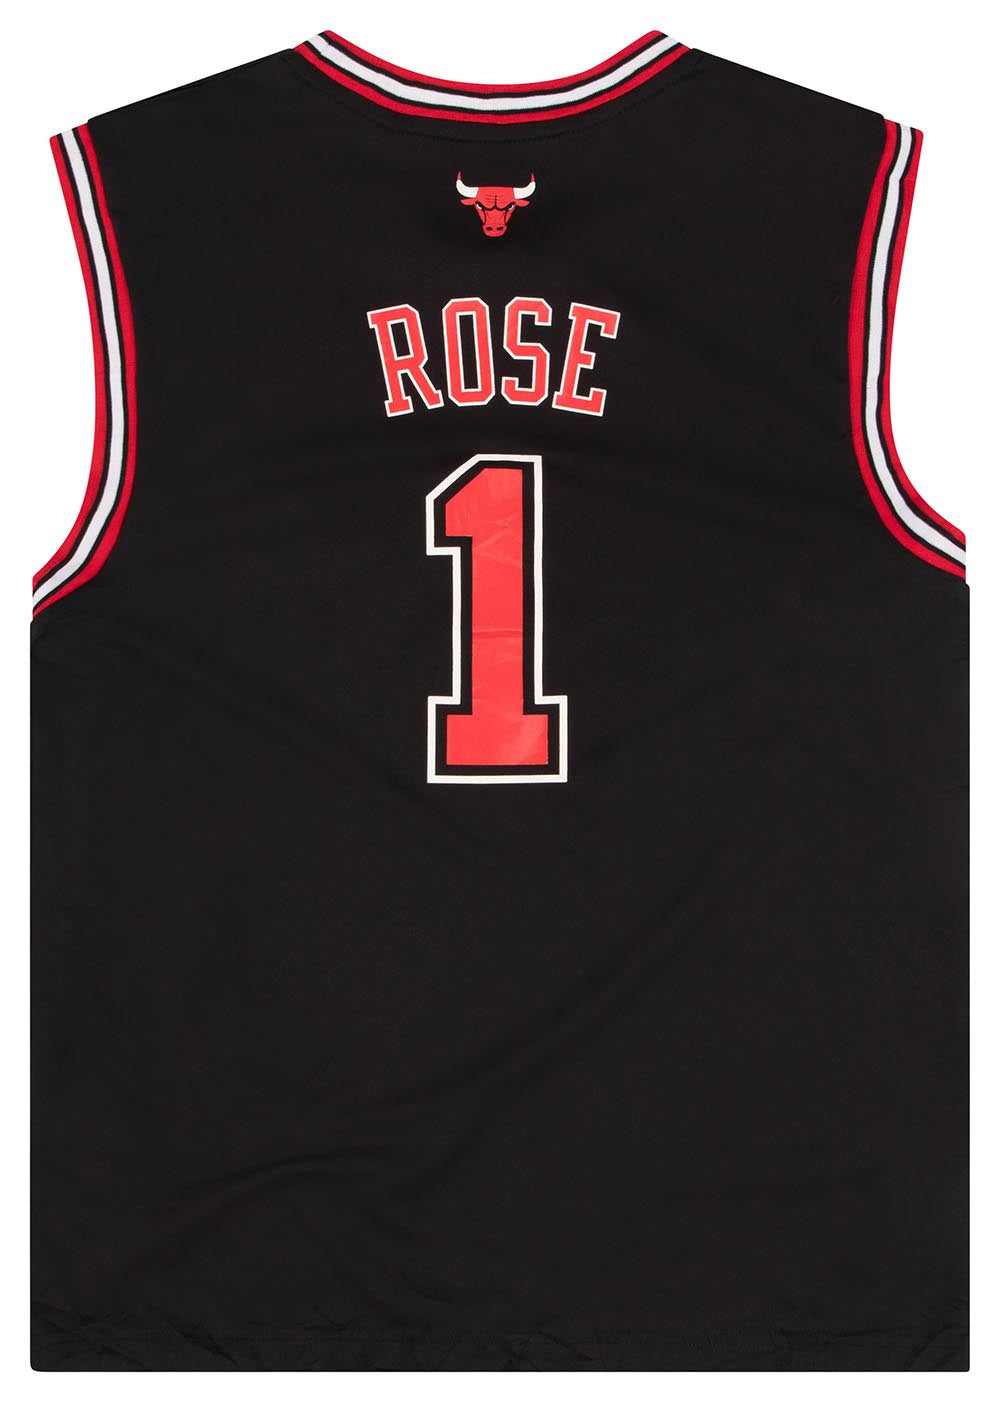 NBA Chicago Bulls Derrick Rose Swingman Alternate Youth Jersey